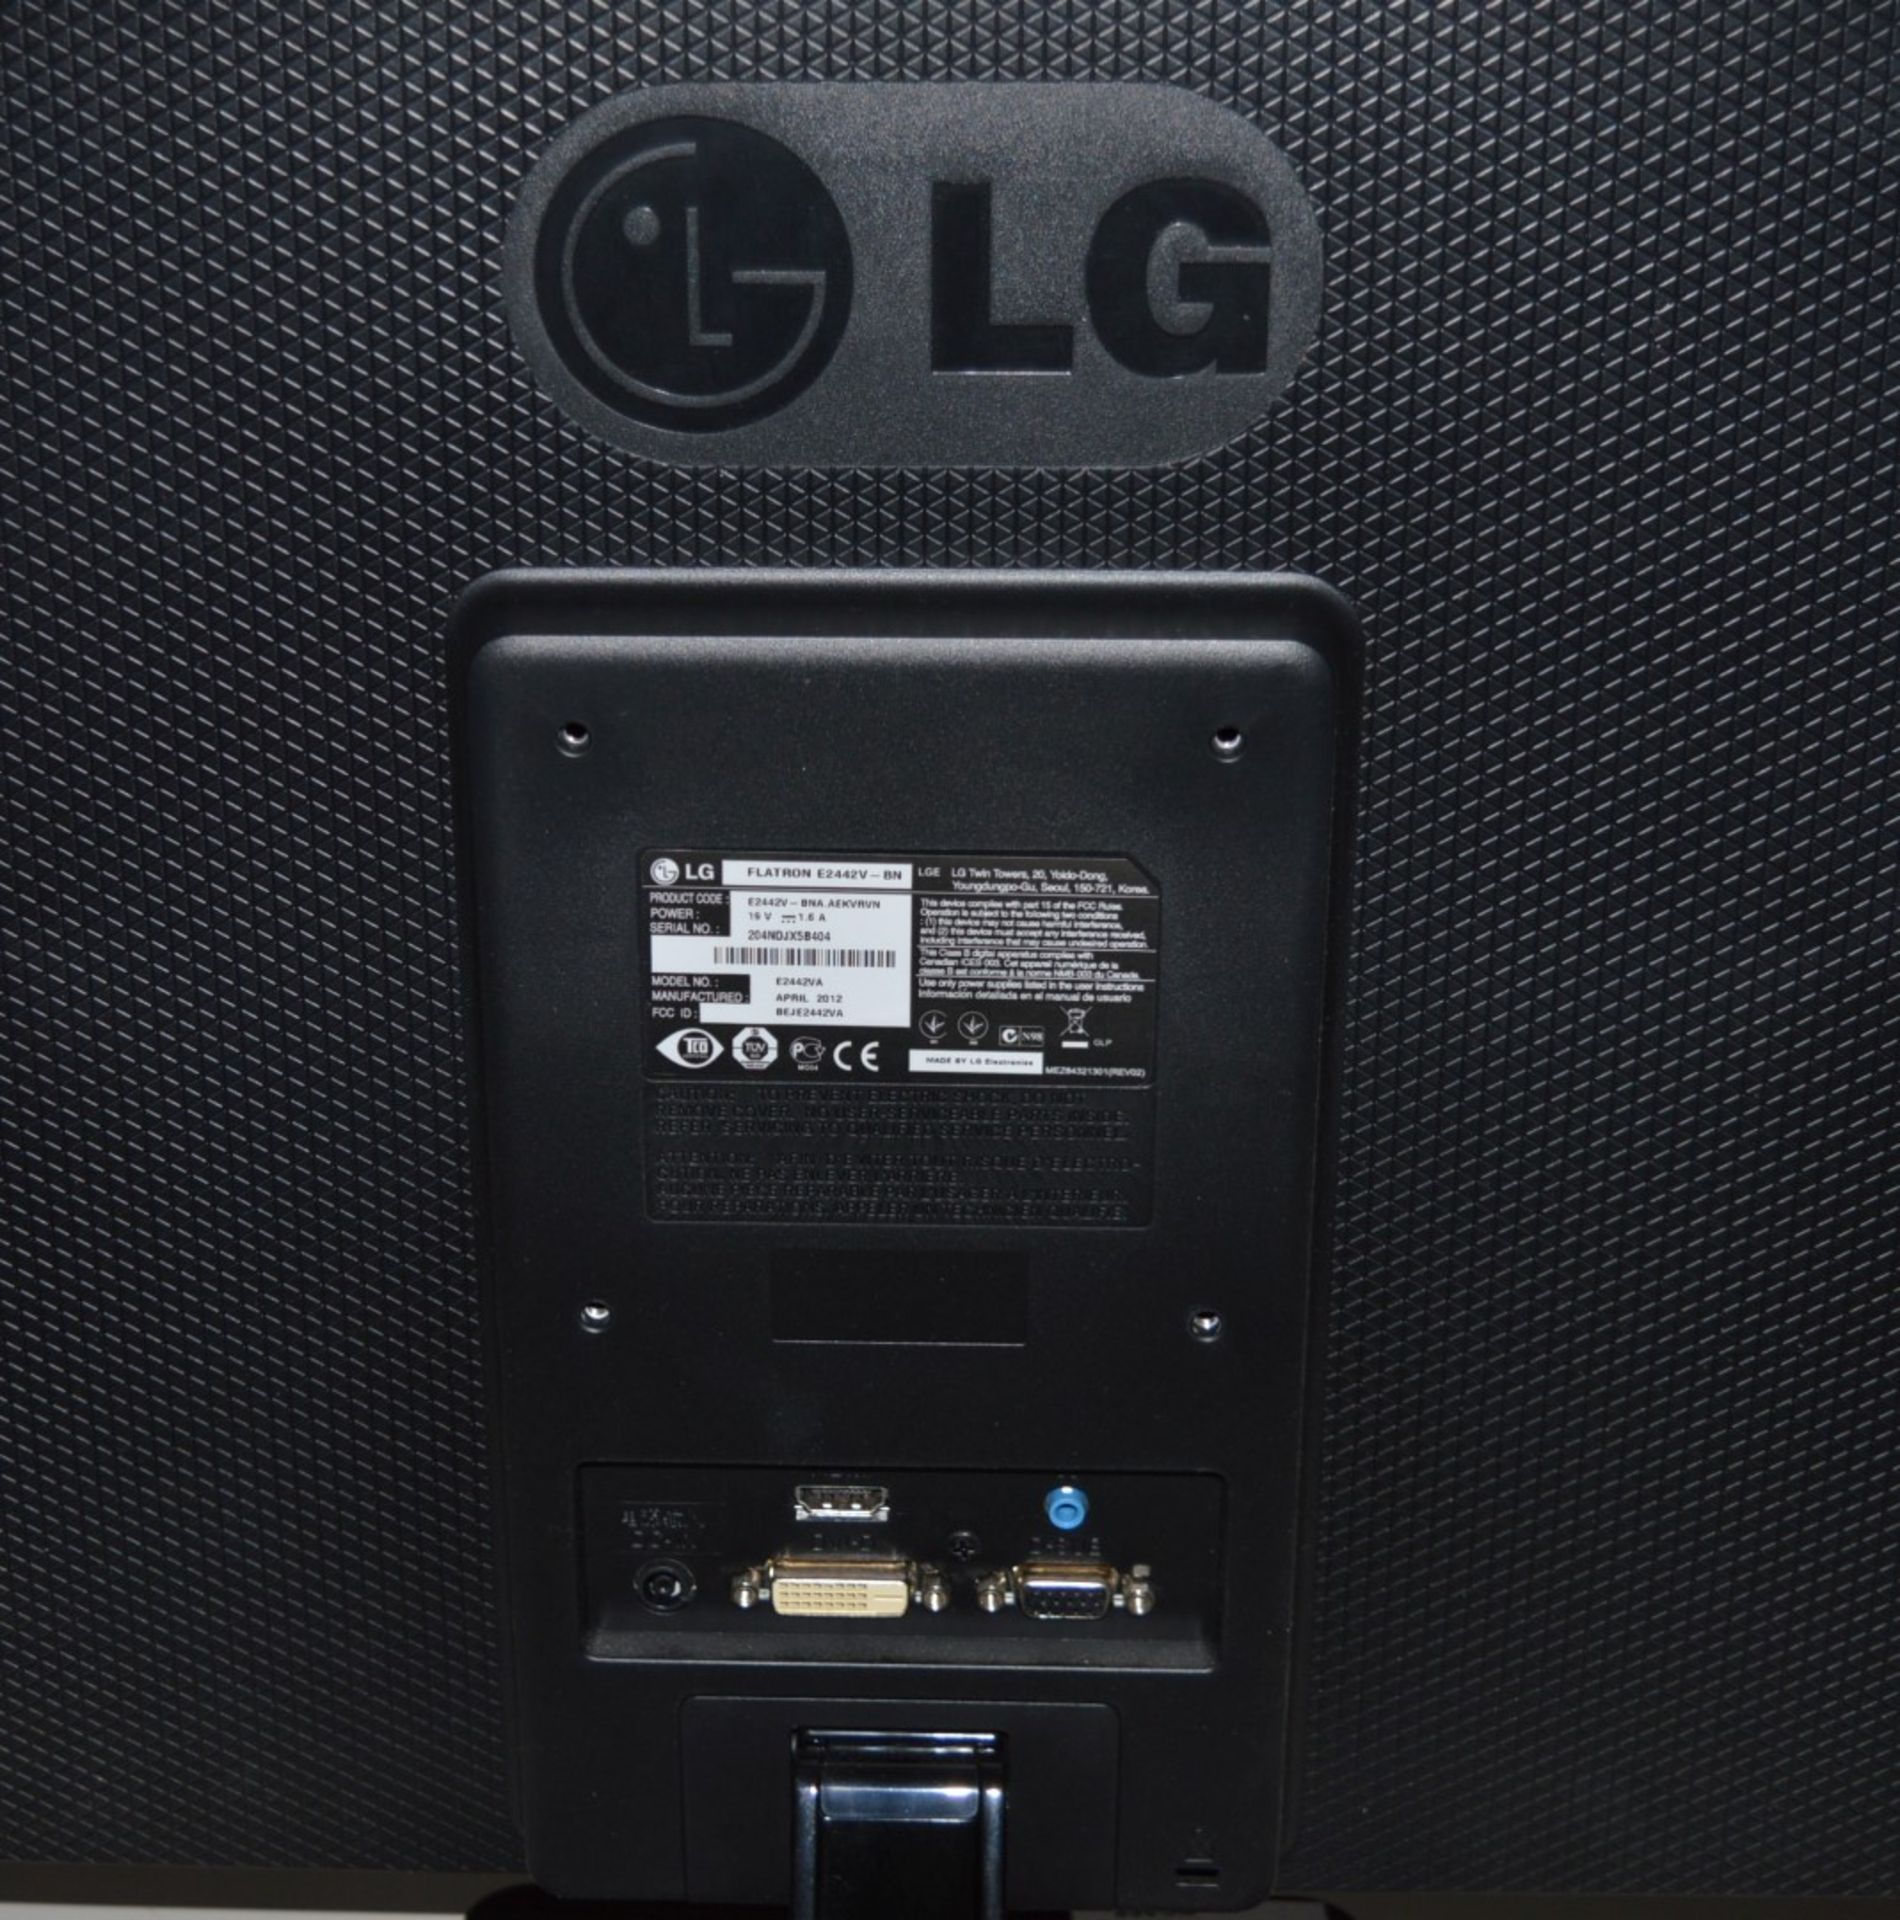 1 x LG 24" Full HD LED Monitor - Model LE2442V-BN - Resolution 1920 x 1080 - Inputs DVI, VGA, HDMI - - Image 4 of 5